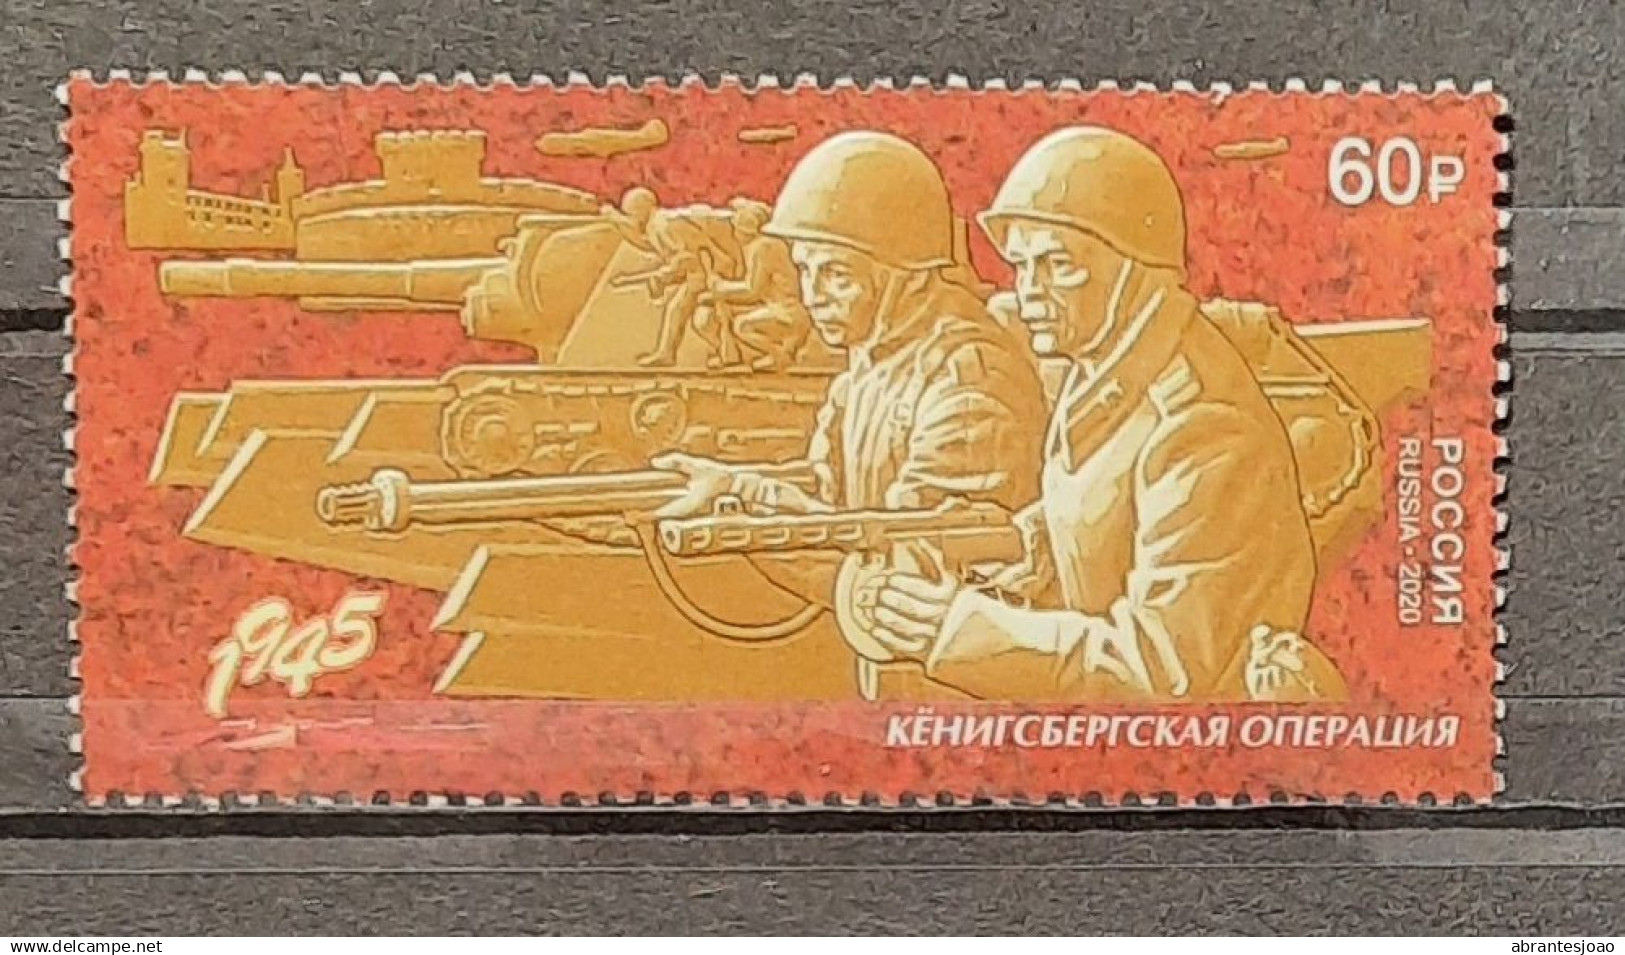 2020 - Russian Federation - MNH - WWII-Liberation Of Manchuria+Batlle Könisberg+Vislo-Oder Operation - 3 Stamps - Ongebruikt